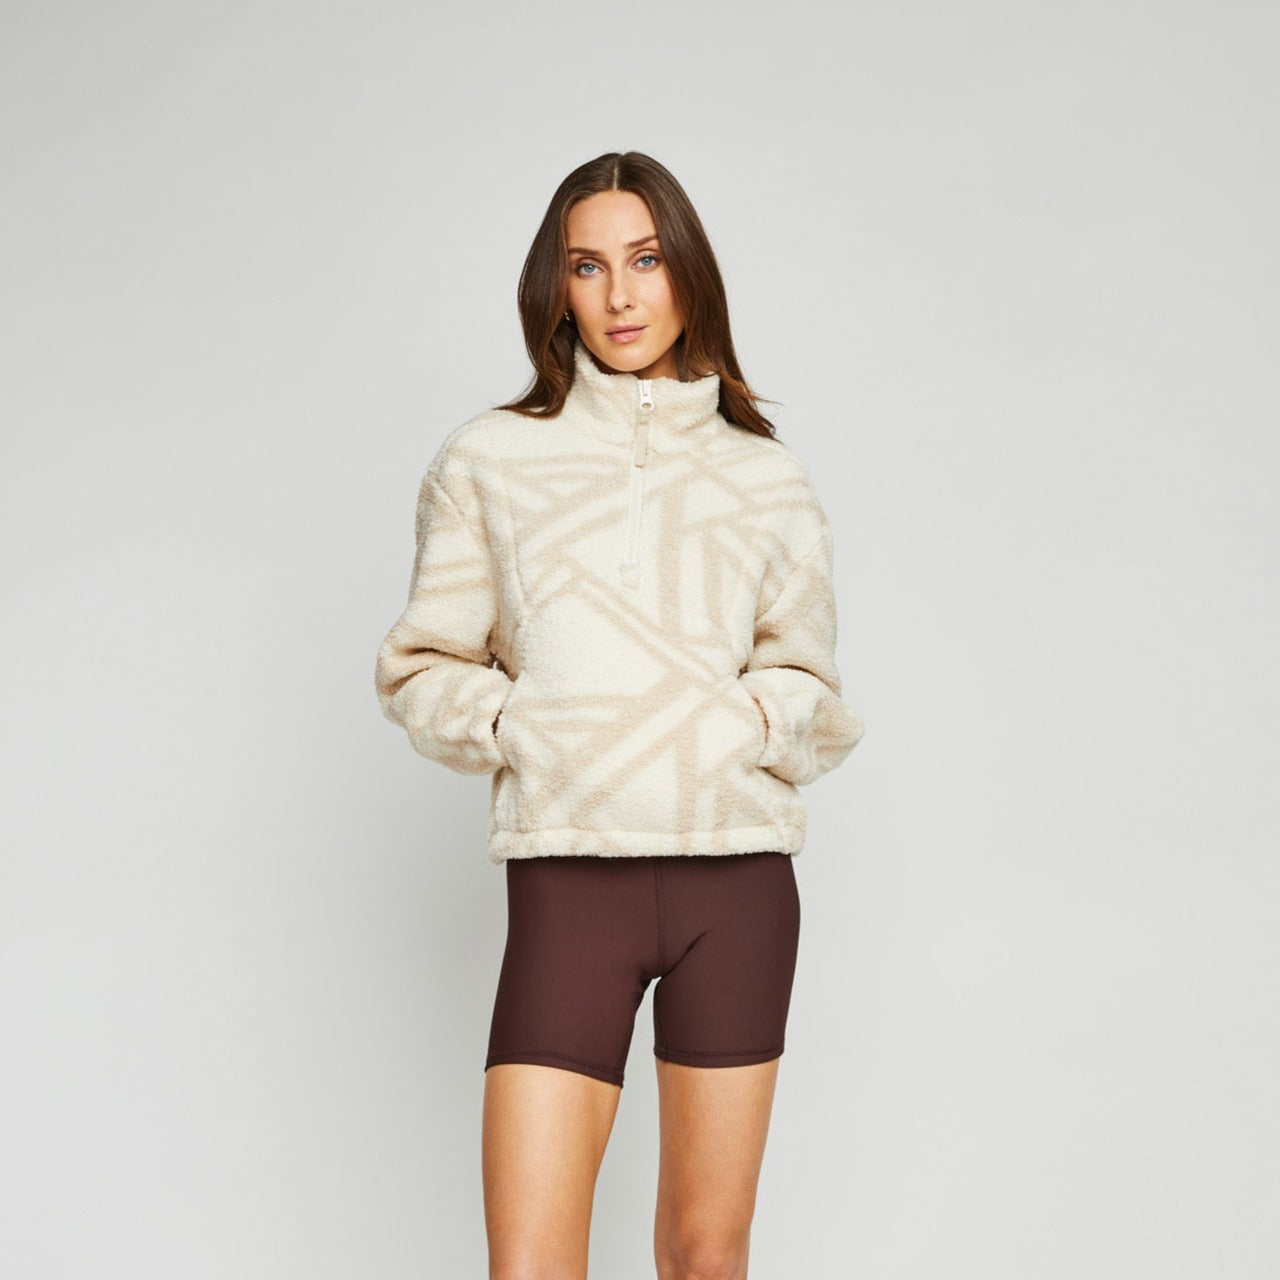 Caleb Quarter Zip Pullover Sweater / Jacket